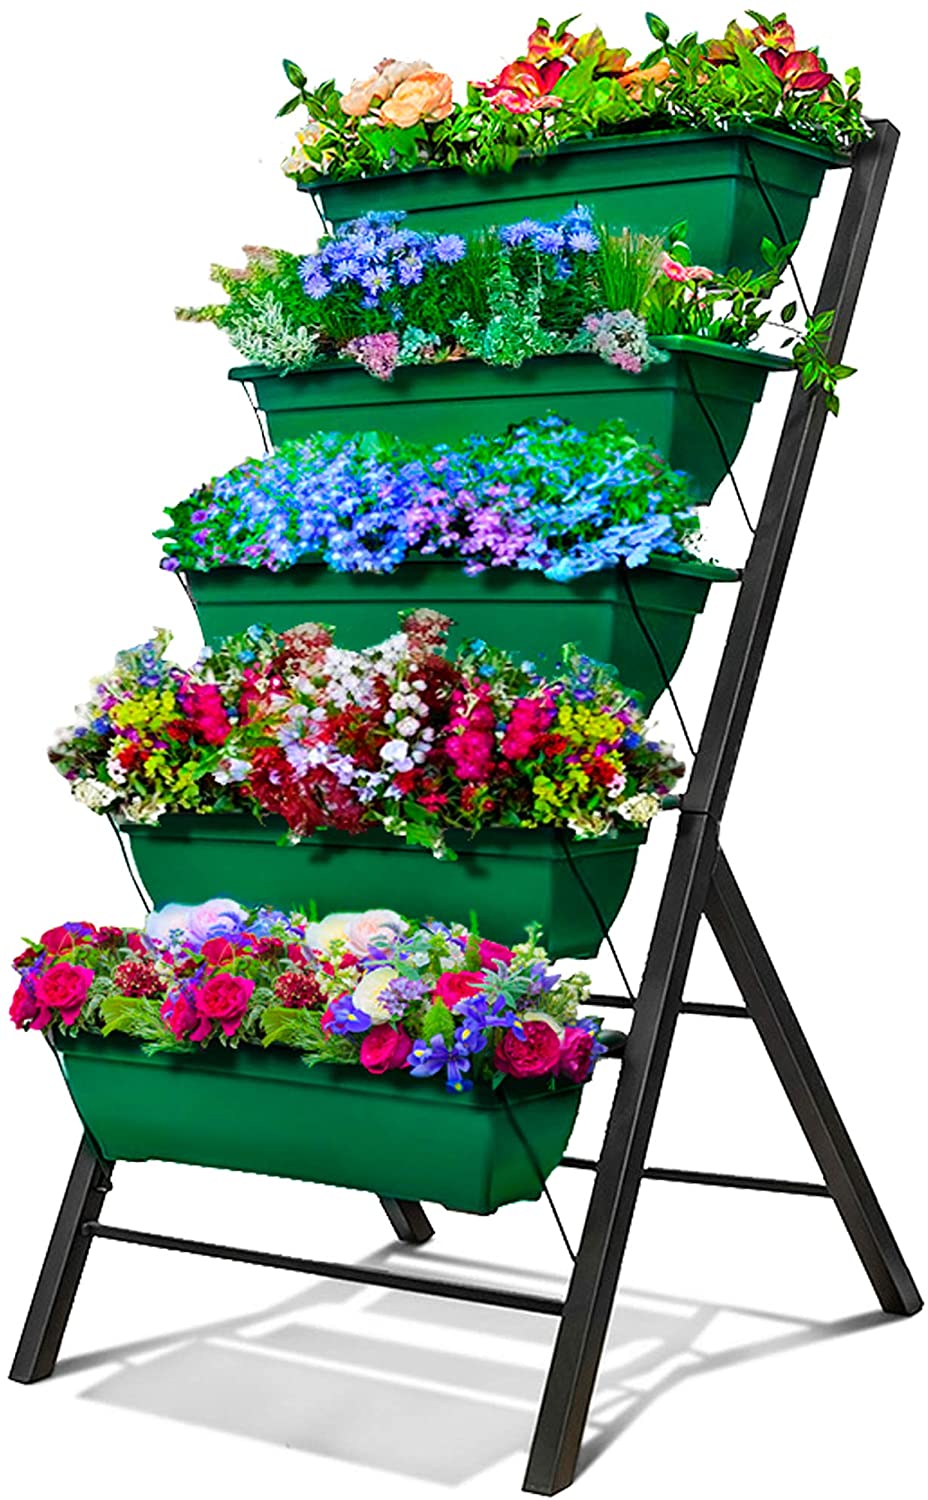 Best Vertical Garden Kits